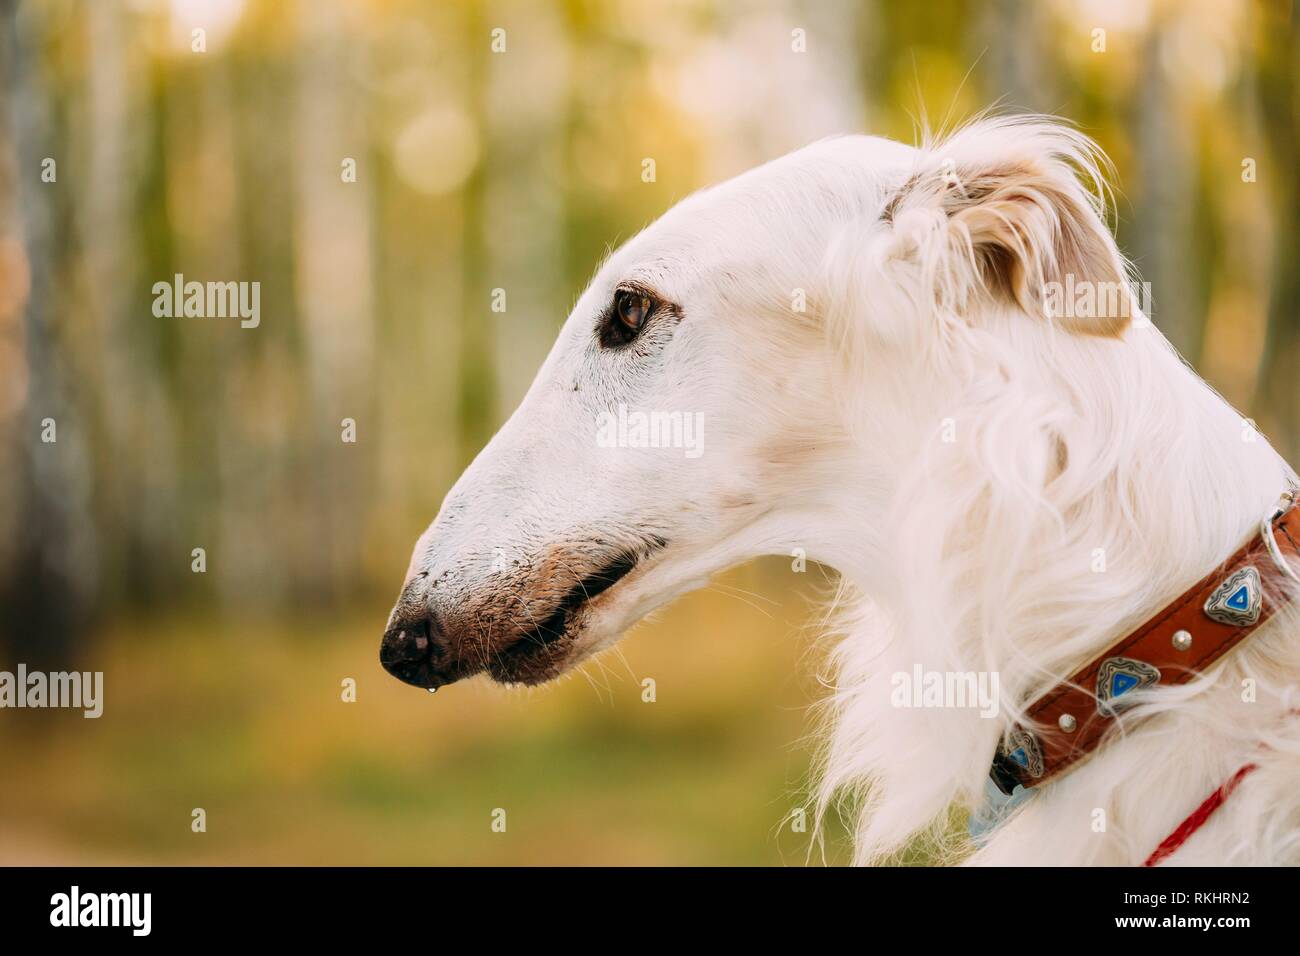 sighthound breeds